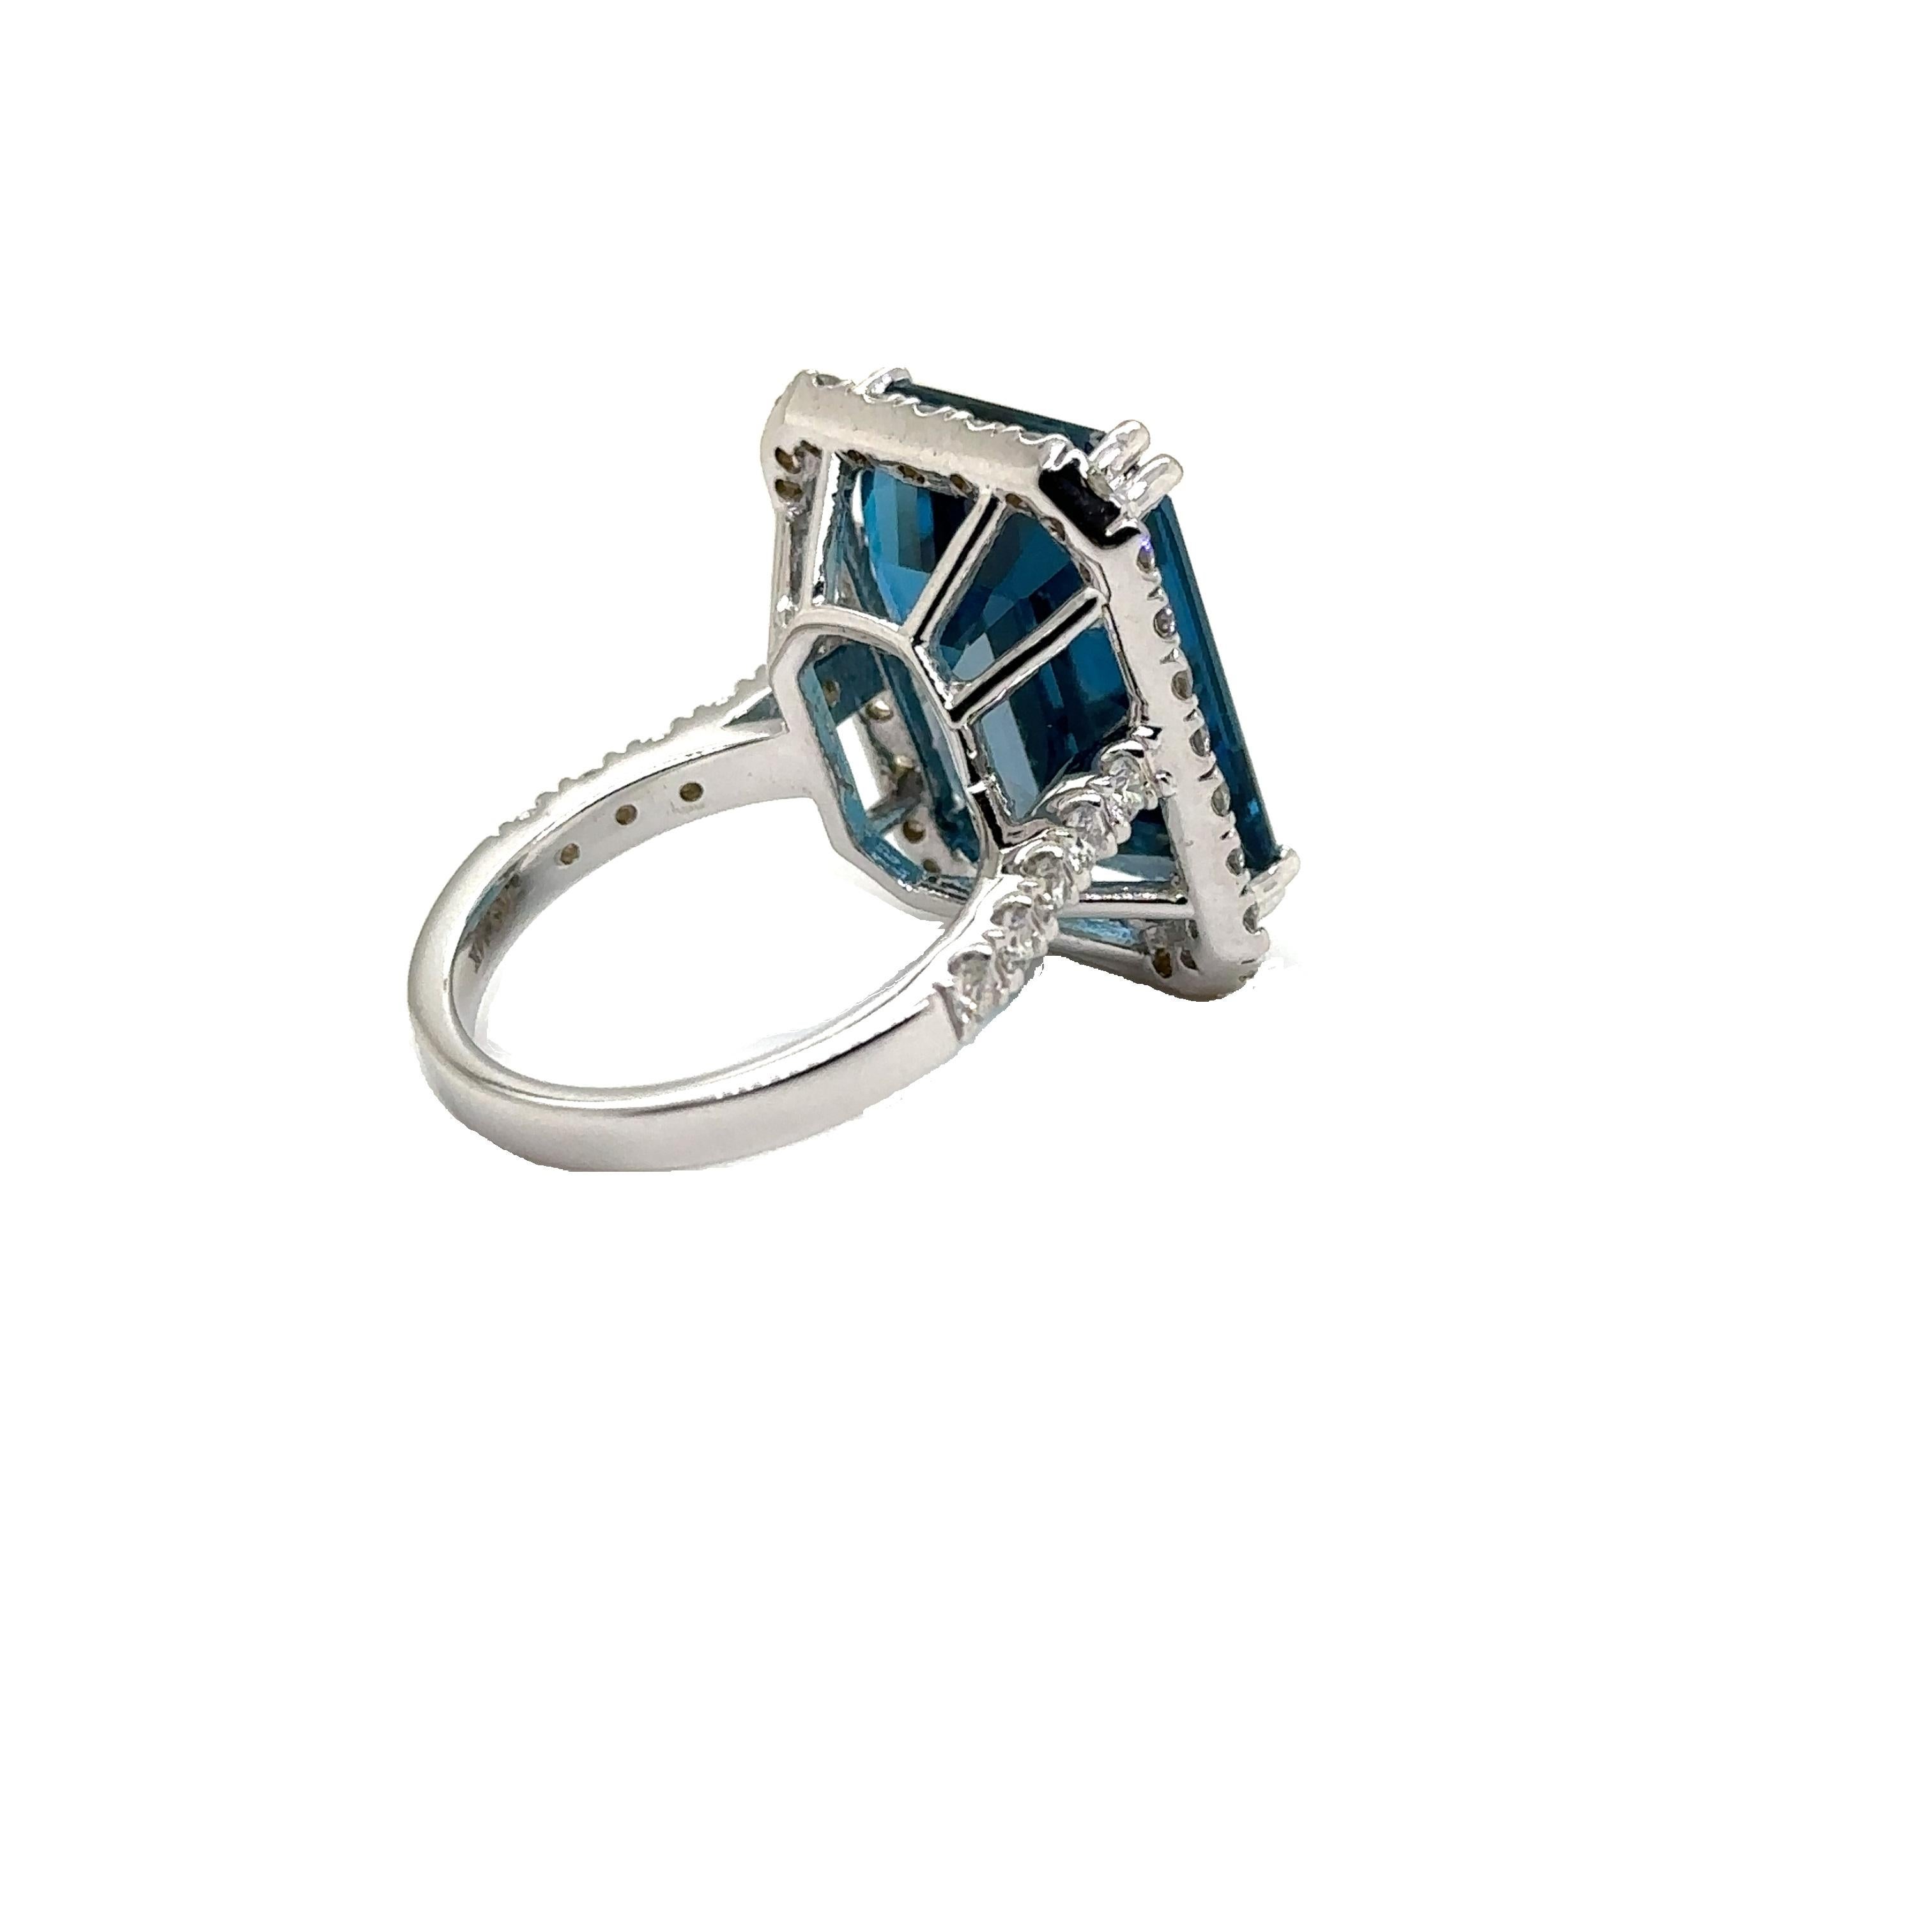 Emerald Cut JAS-21-2245 - 14K WG 1.25ct GH-SI1 DIAMONDS & EMERALD CUT LONDON BLUE TOPAZ RING